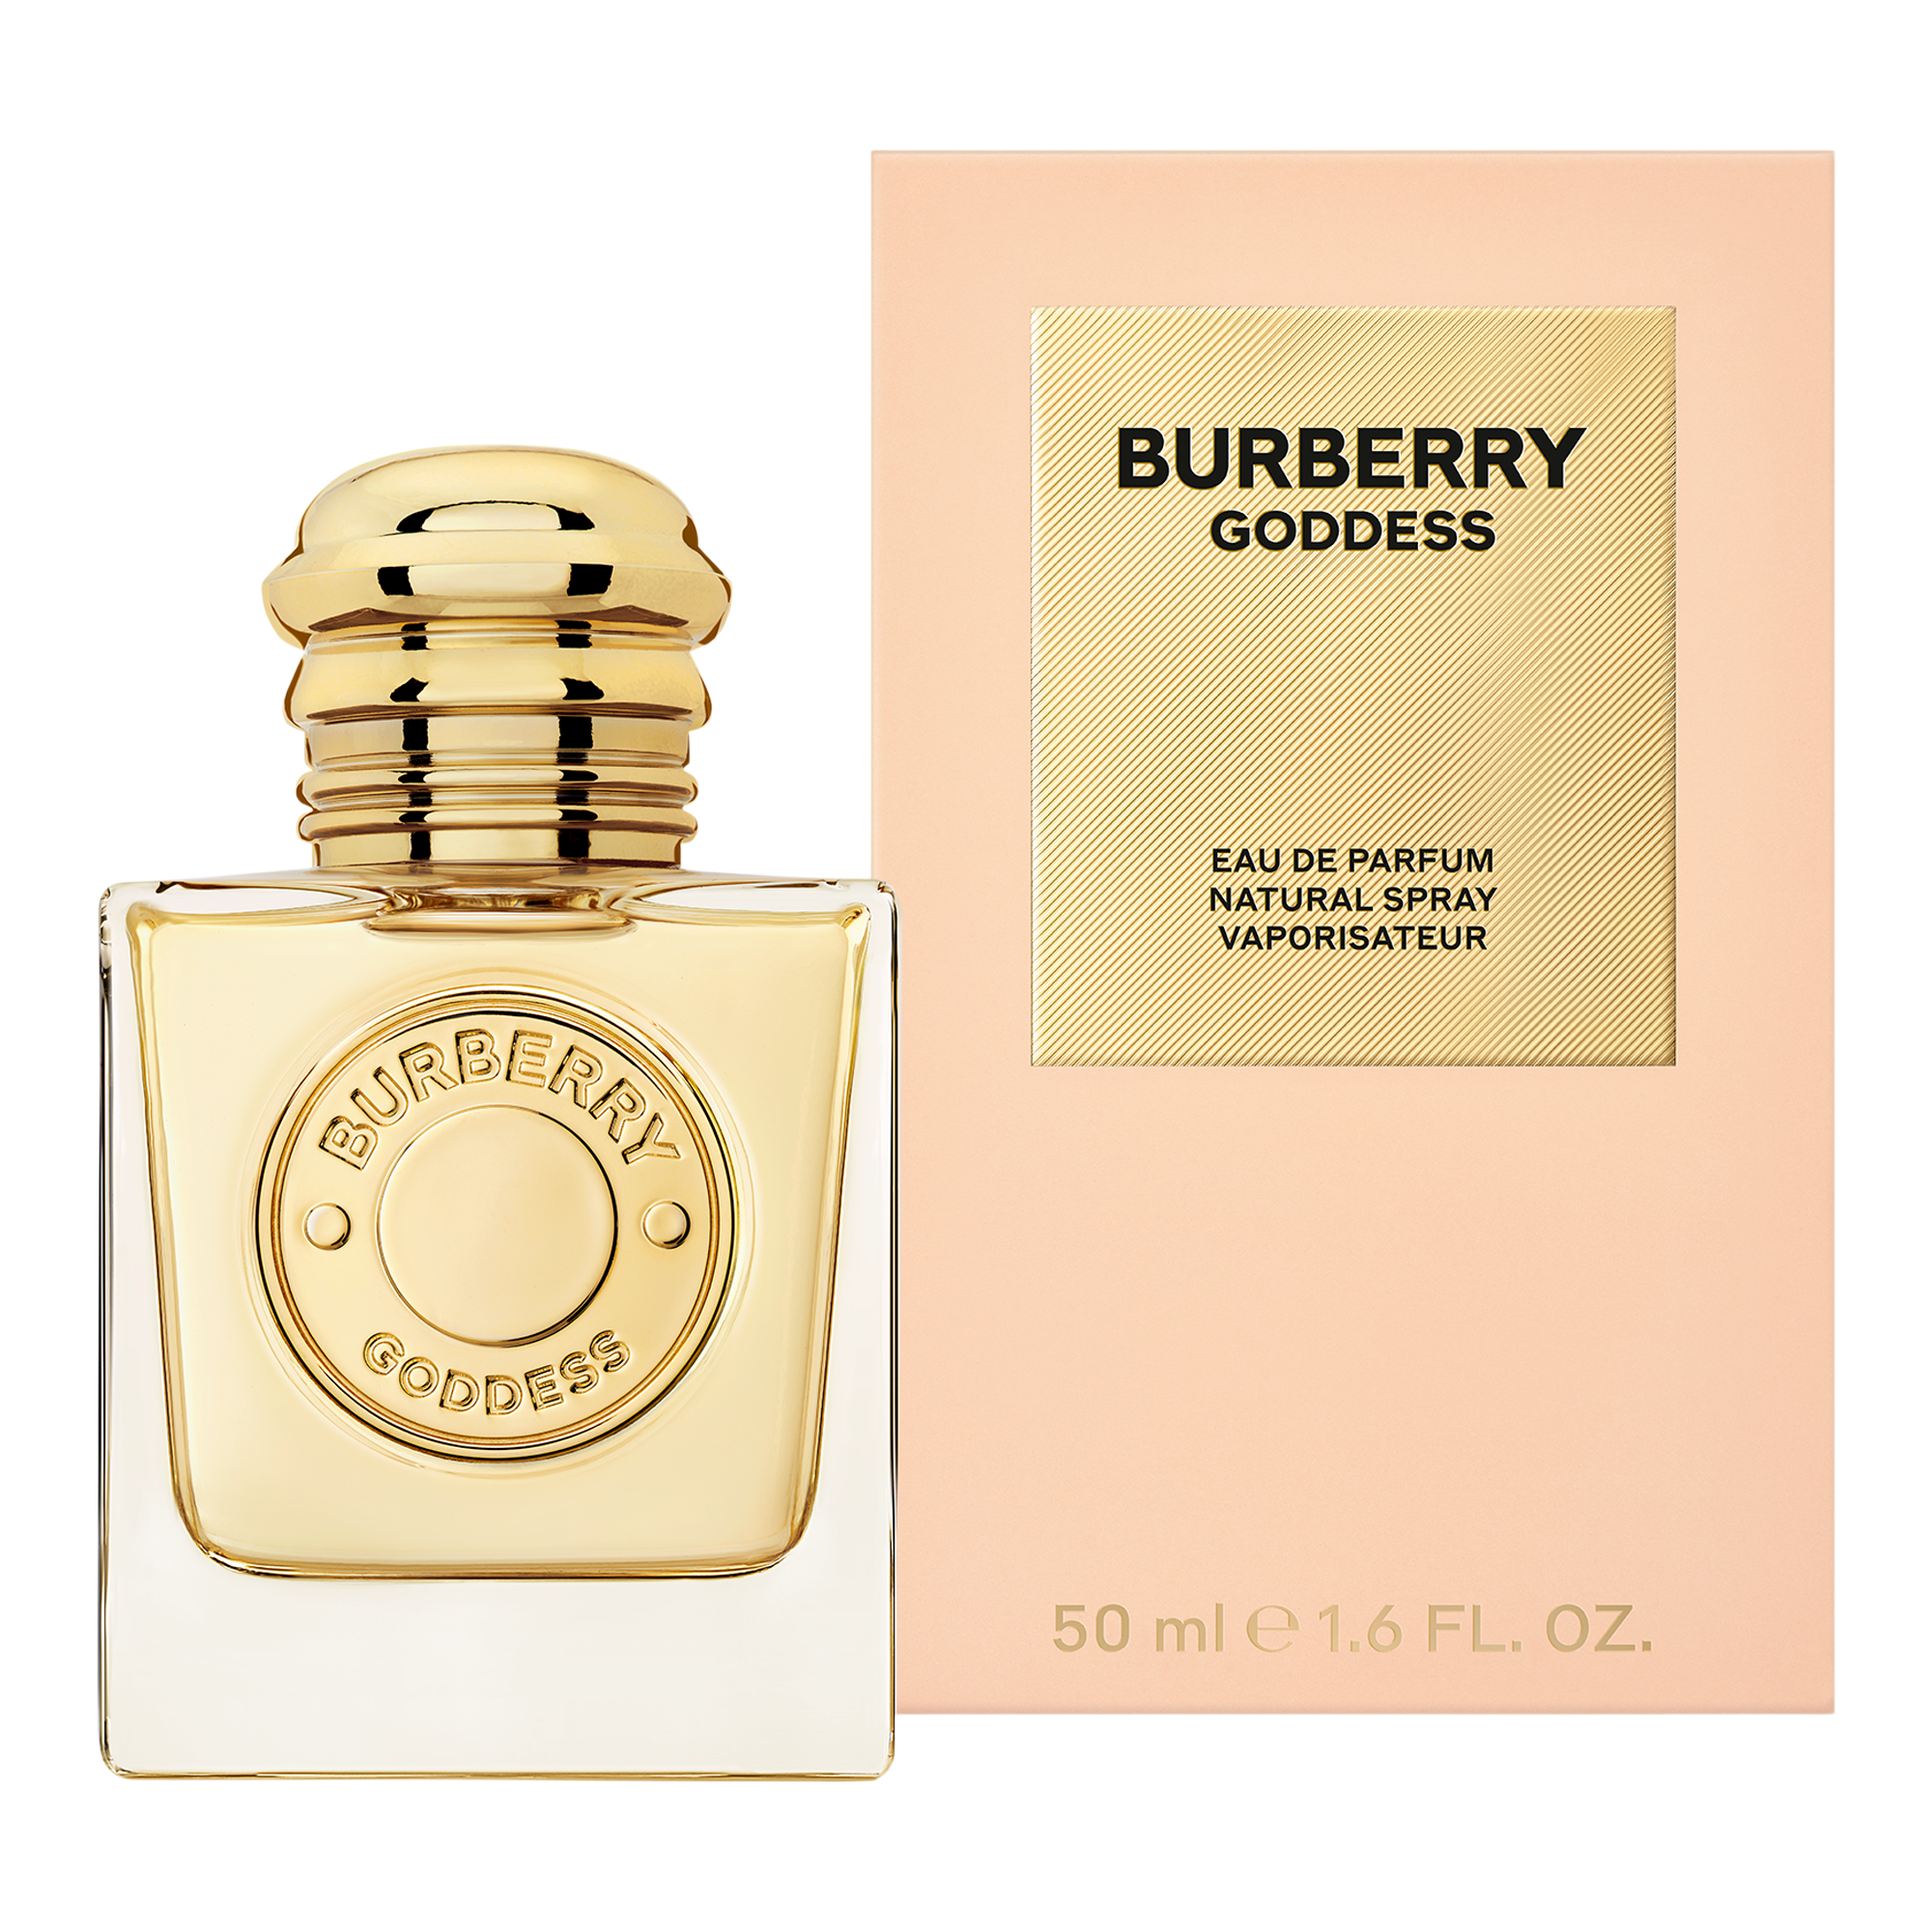 Burberry Goddess Eau de Parfum Burberry Ulta Beauty